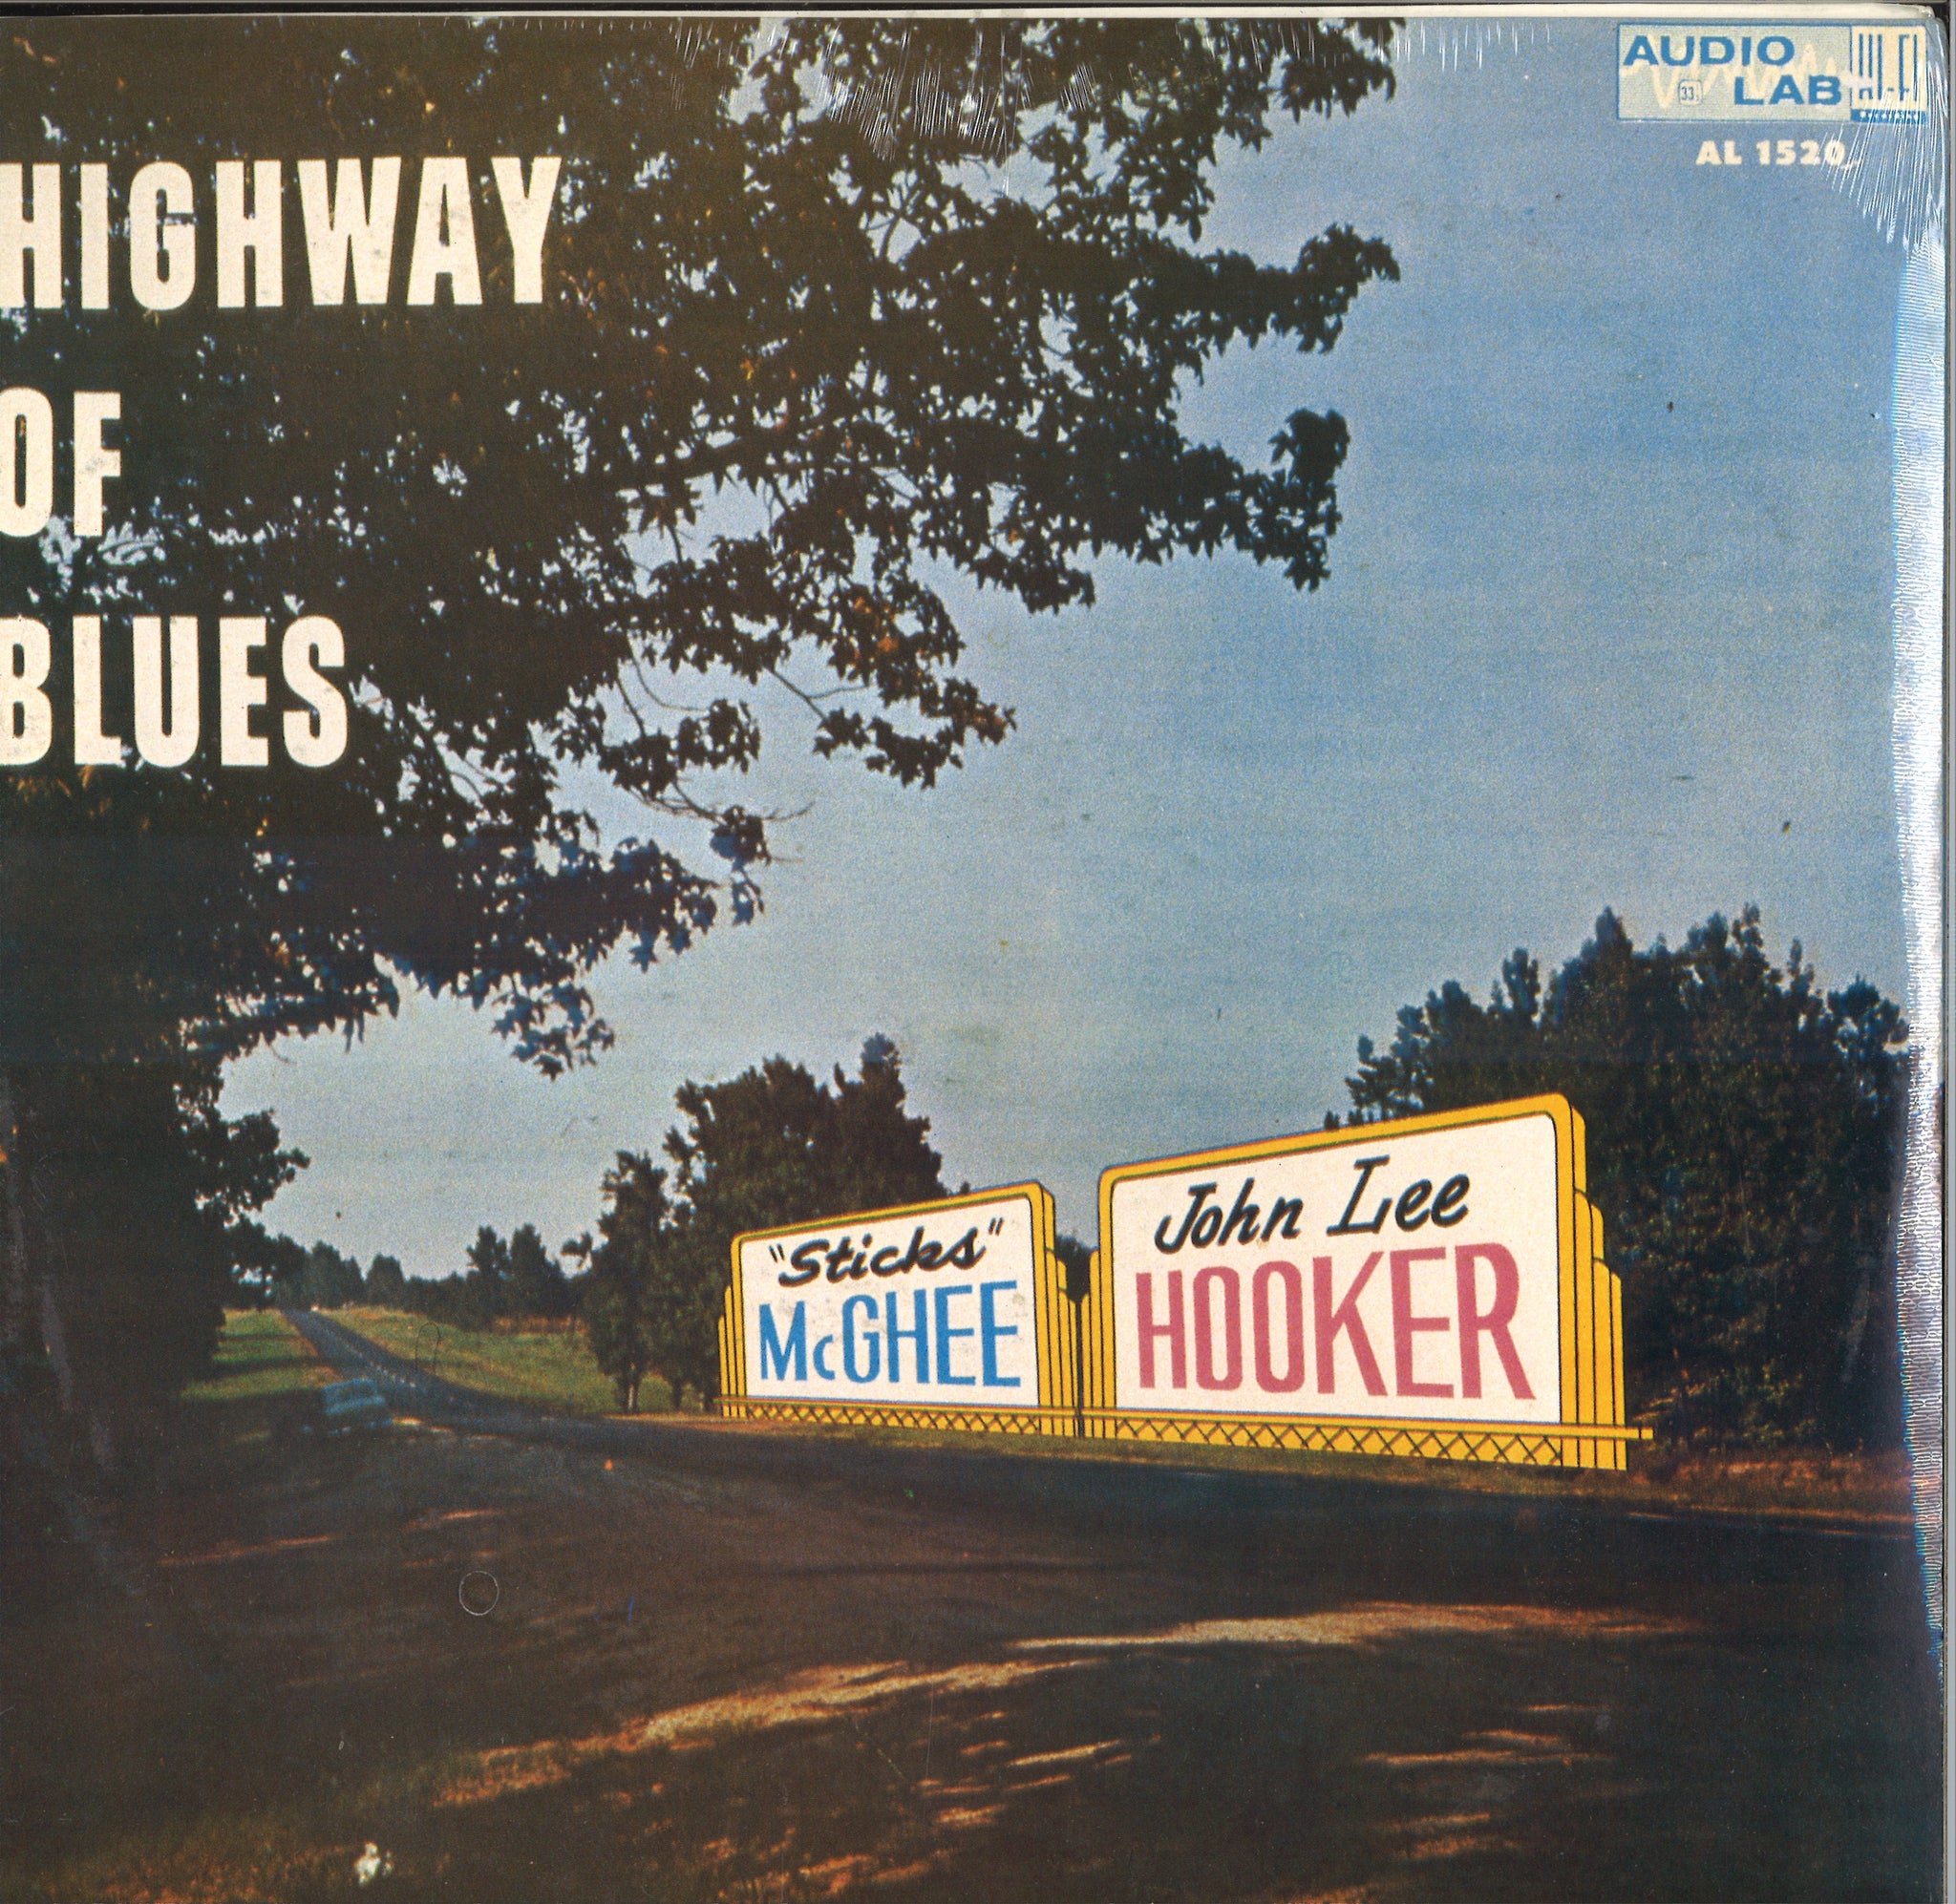 John Lee Hooker & "Sticks" McGhee Highway Of Blues